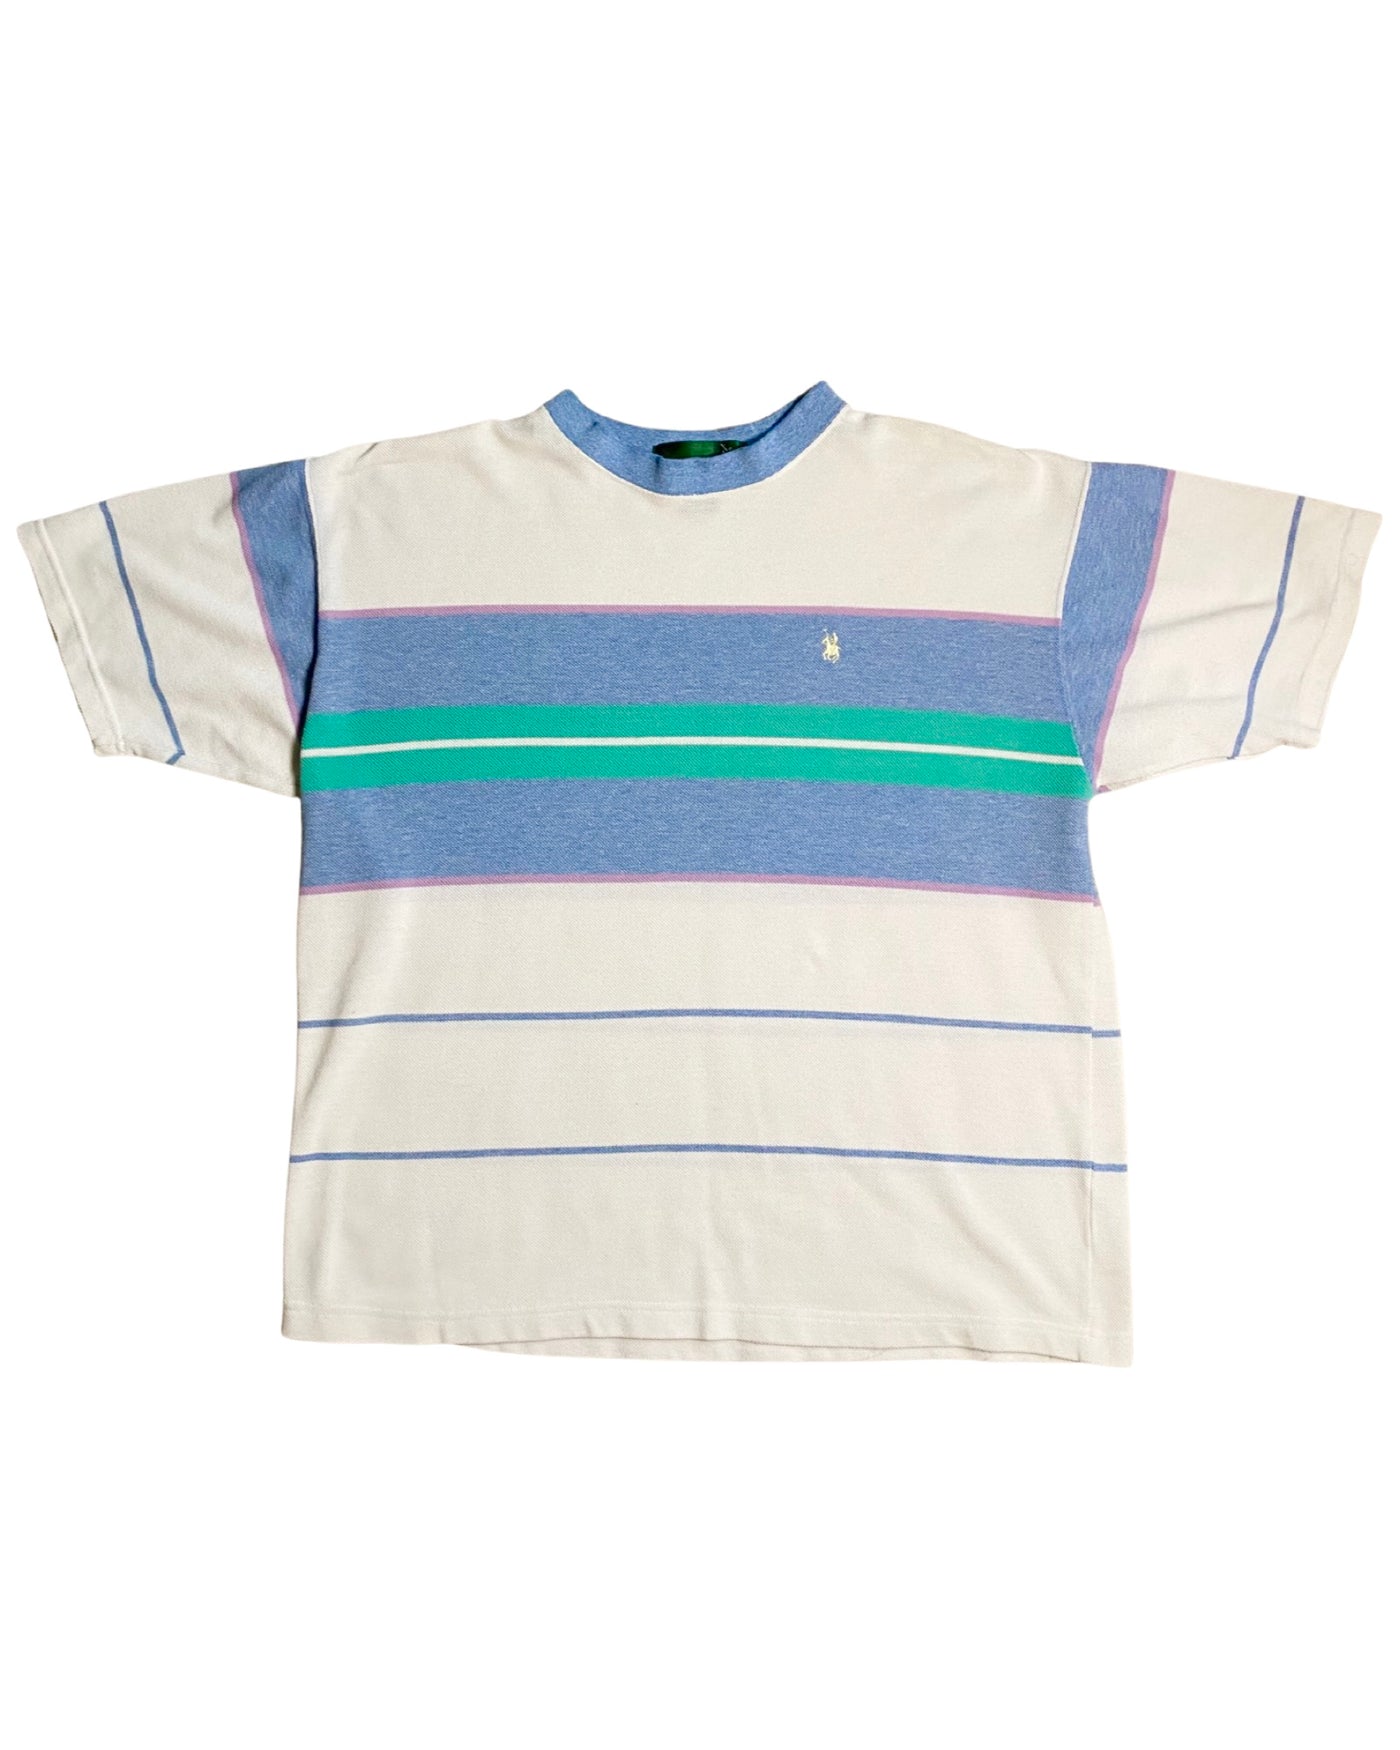 Vintage 90s Hunt Club Striped Shirt